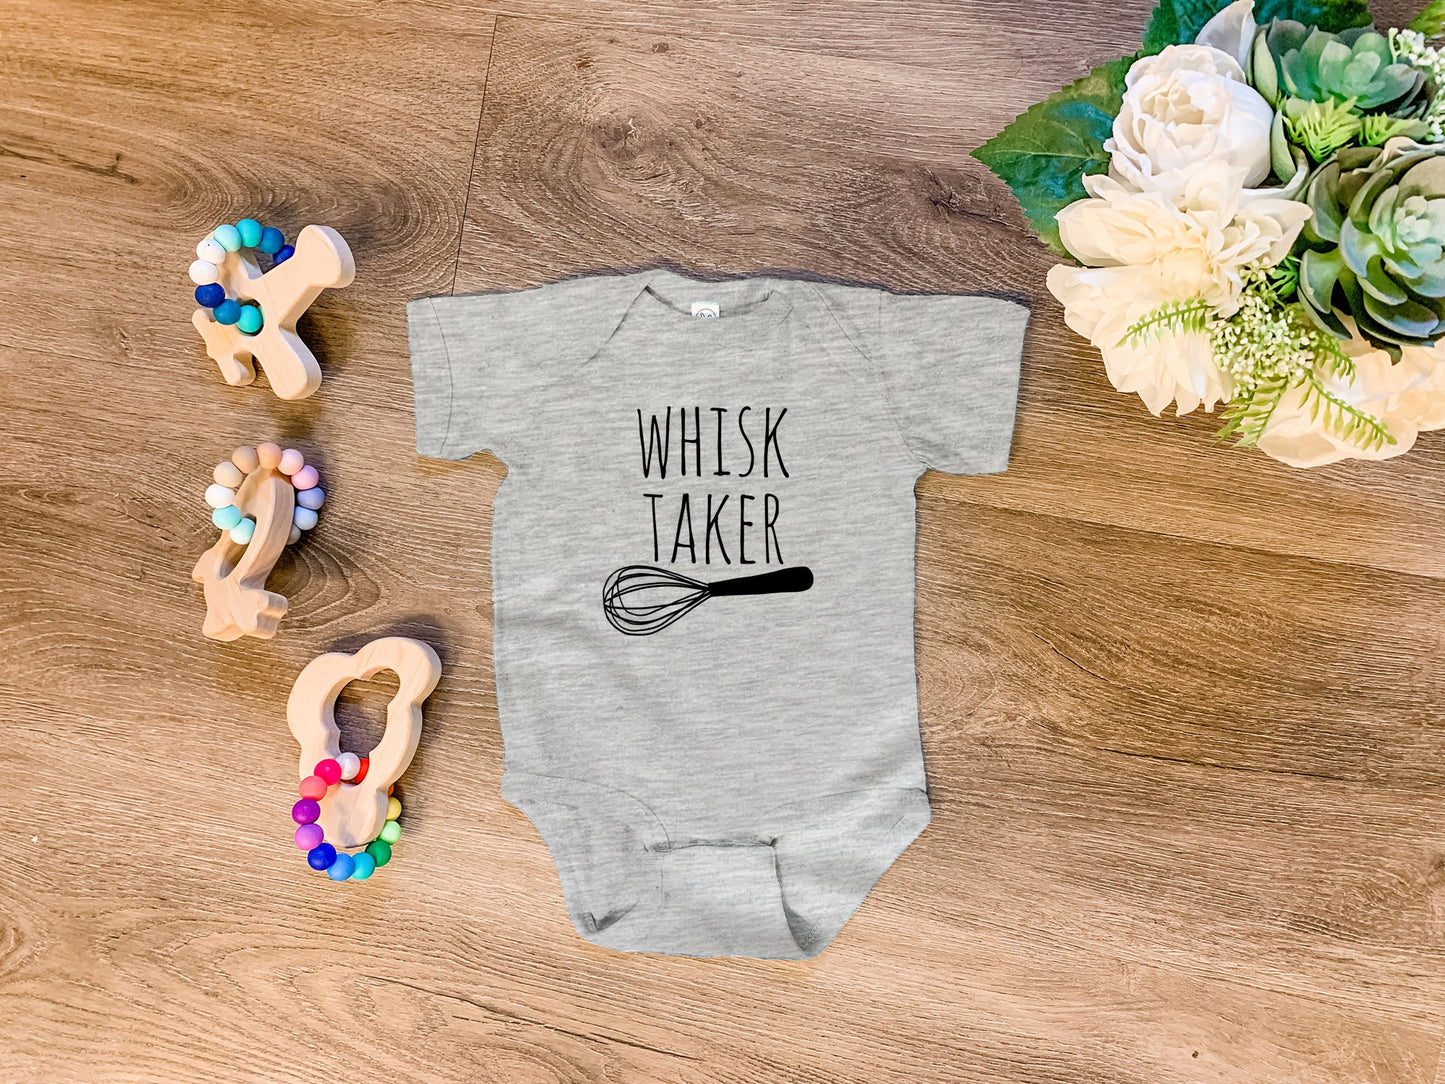 Whisk Taker (Baking) - Onesie - Heather Gray, Chill, or Lavender